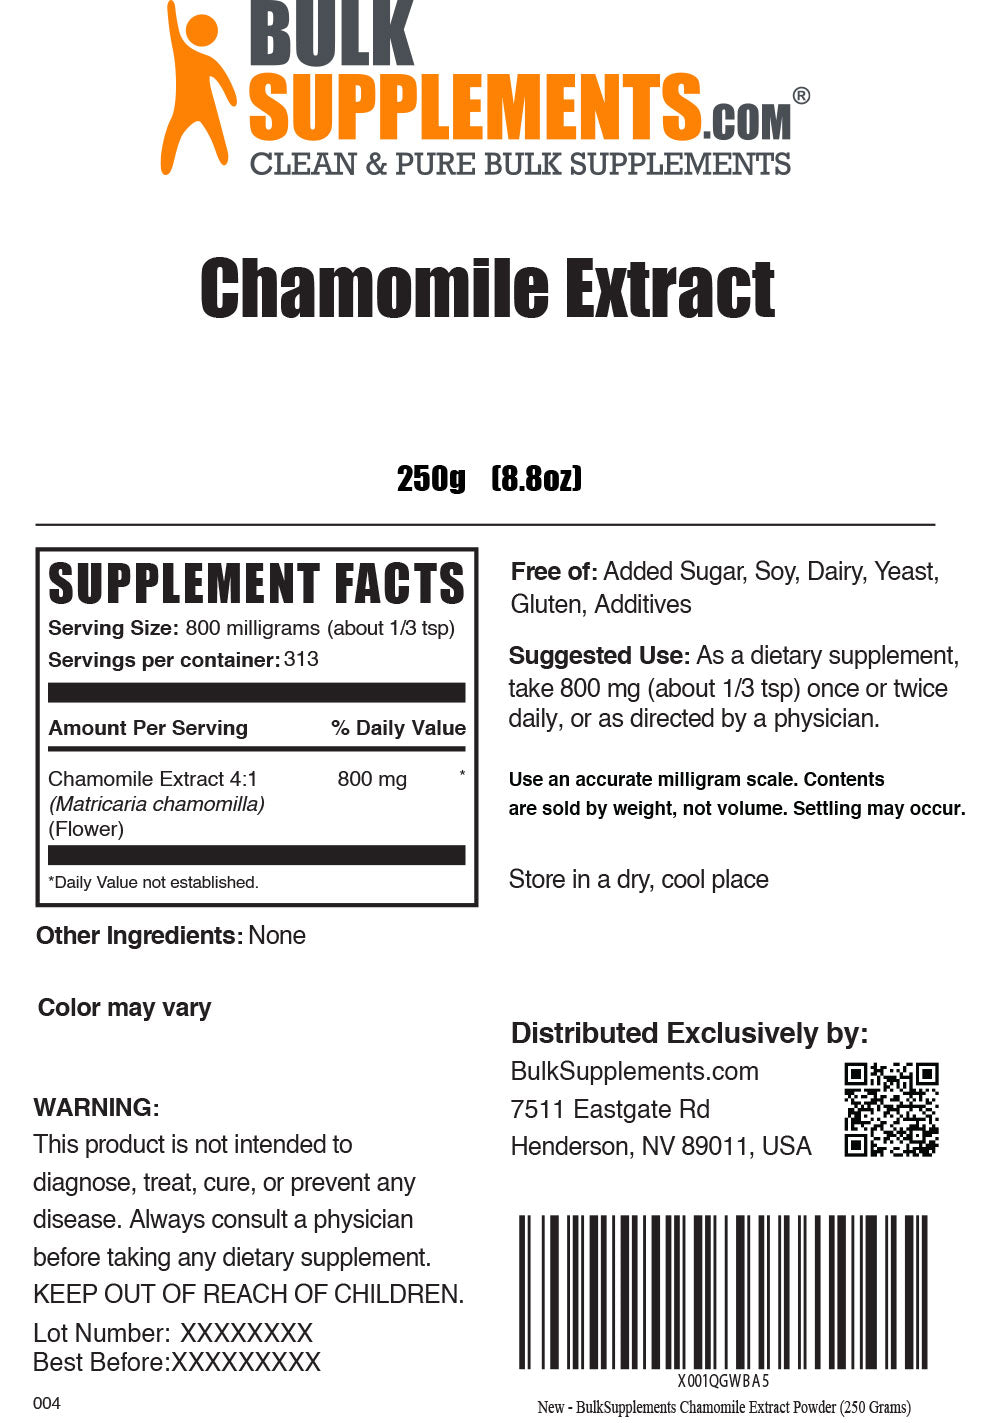 Chamomile Extract Powder